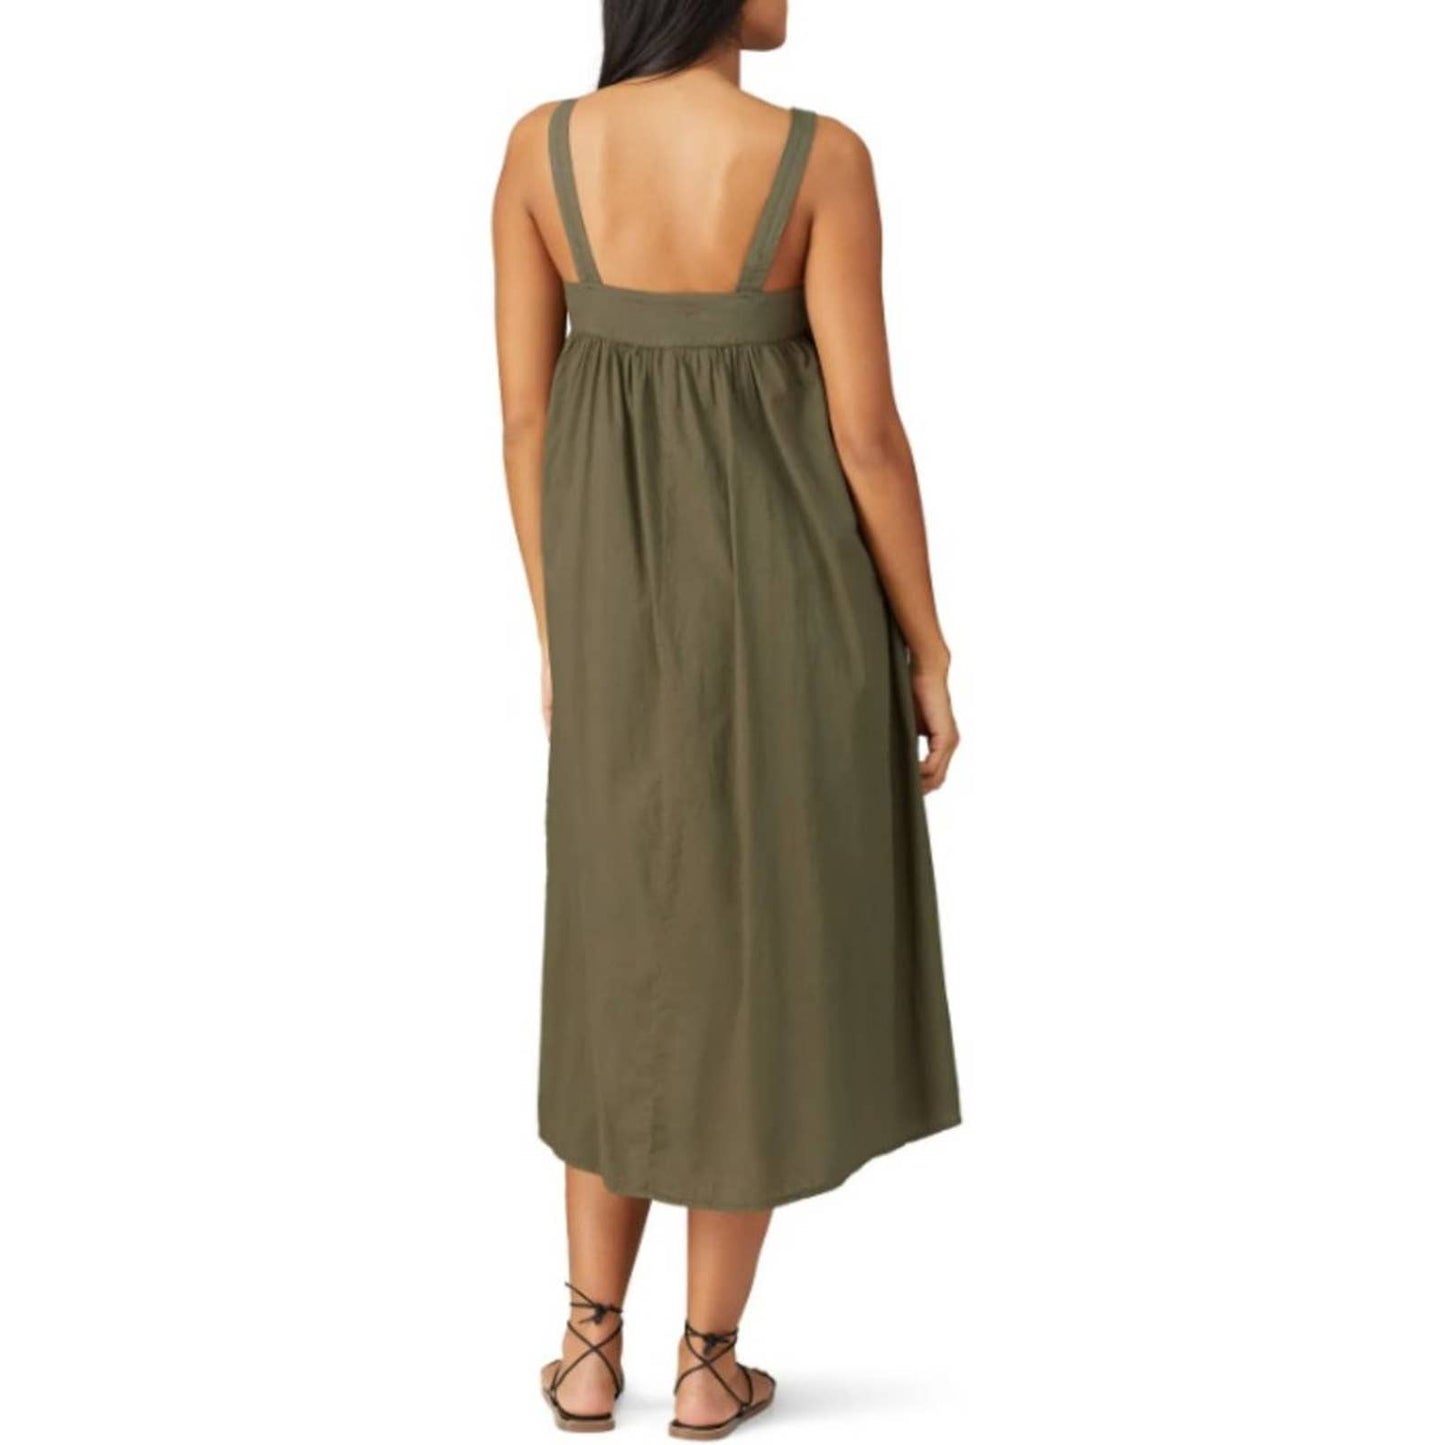 XIRENA Kynsley Dress in Olive Green Size Medium